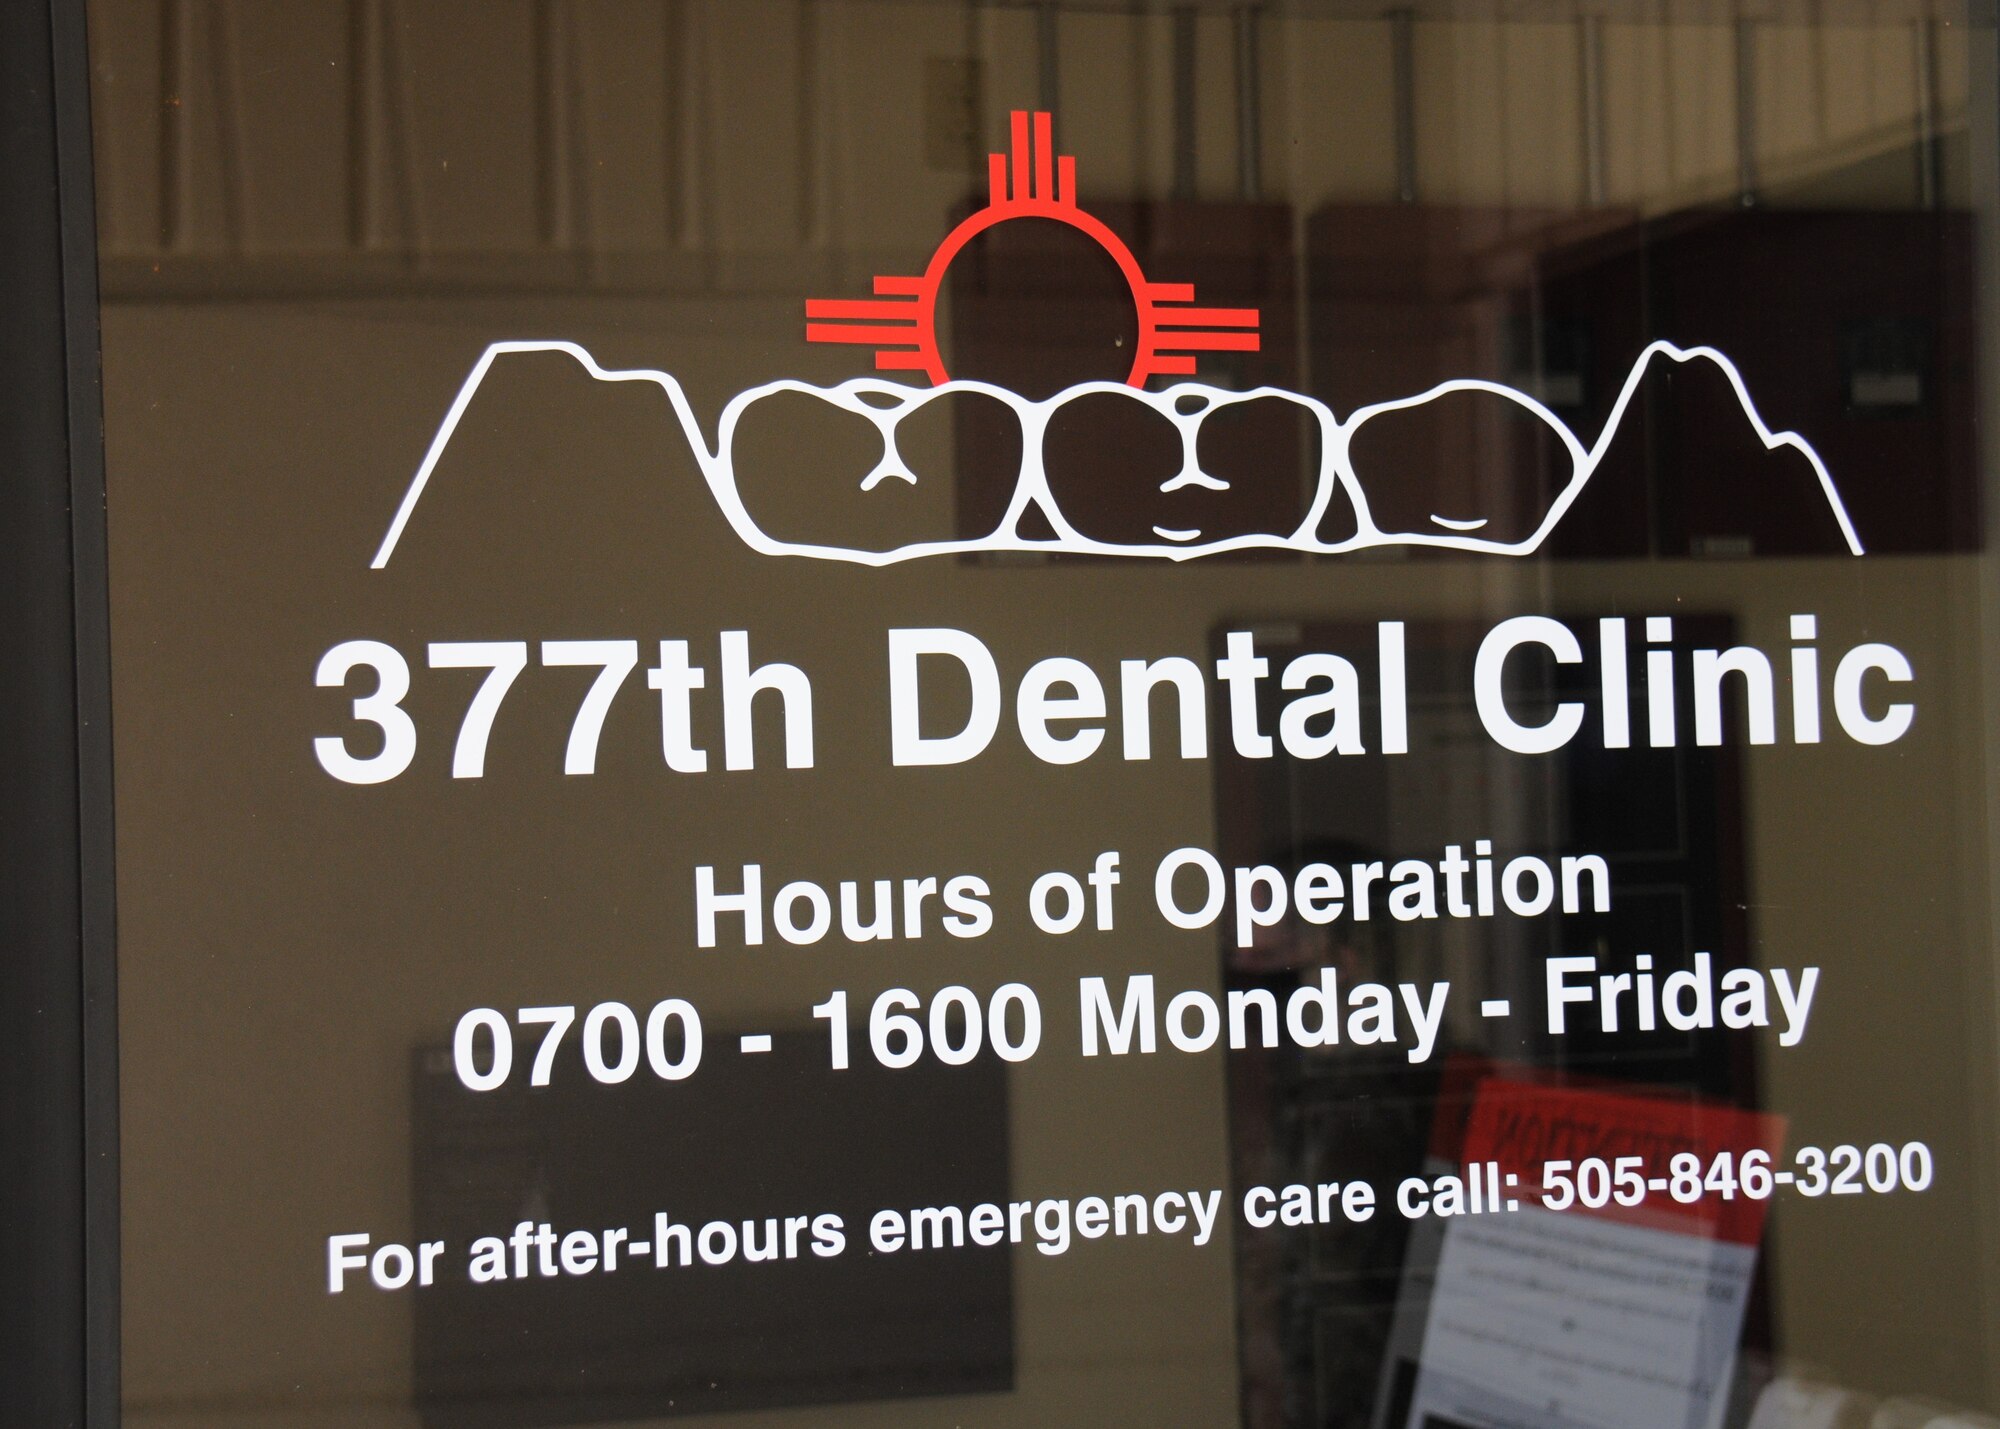 "Molar Mountain" graphic on Dental Clinic door.